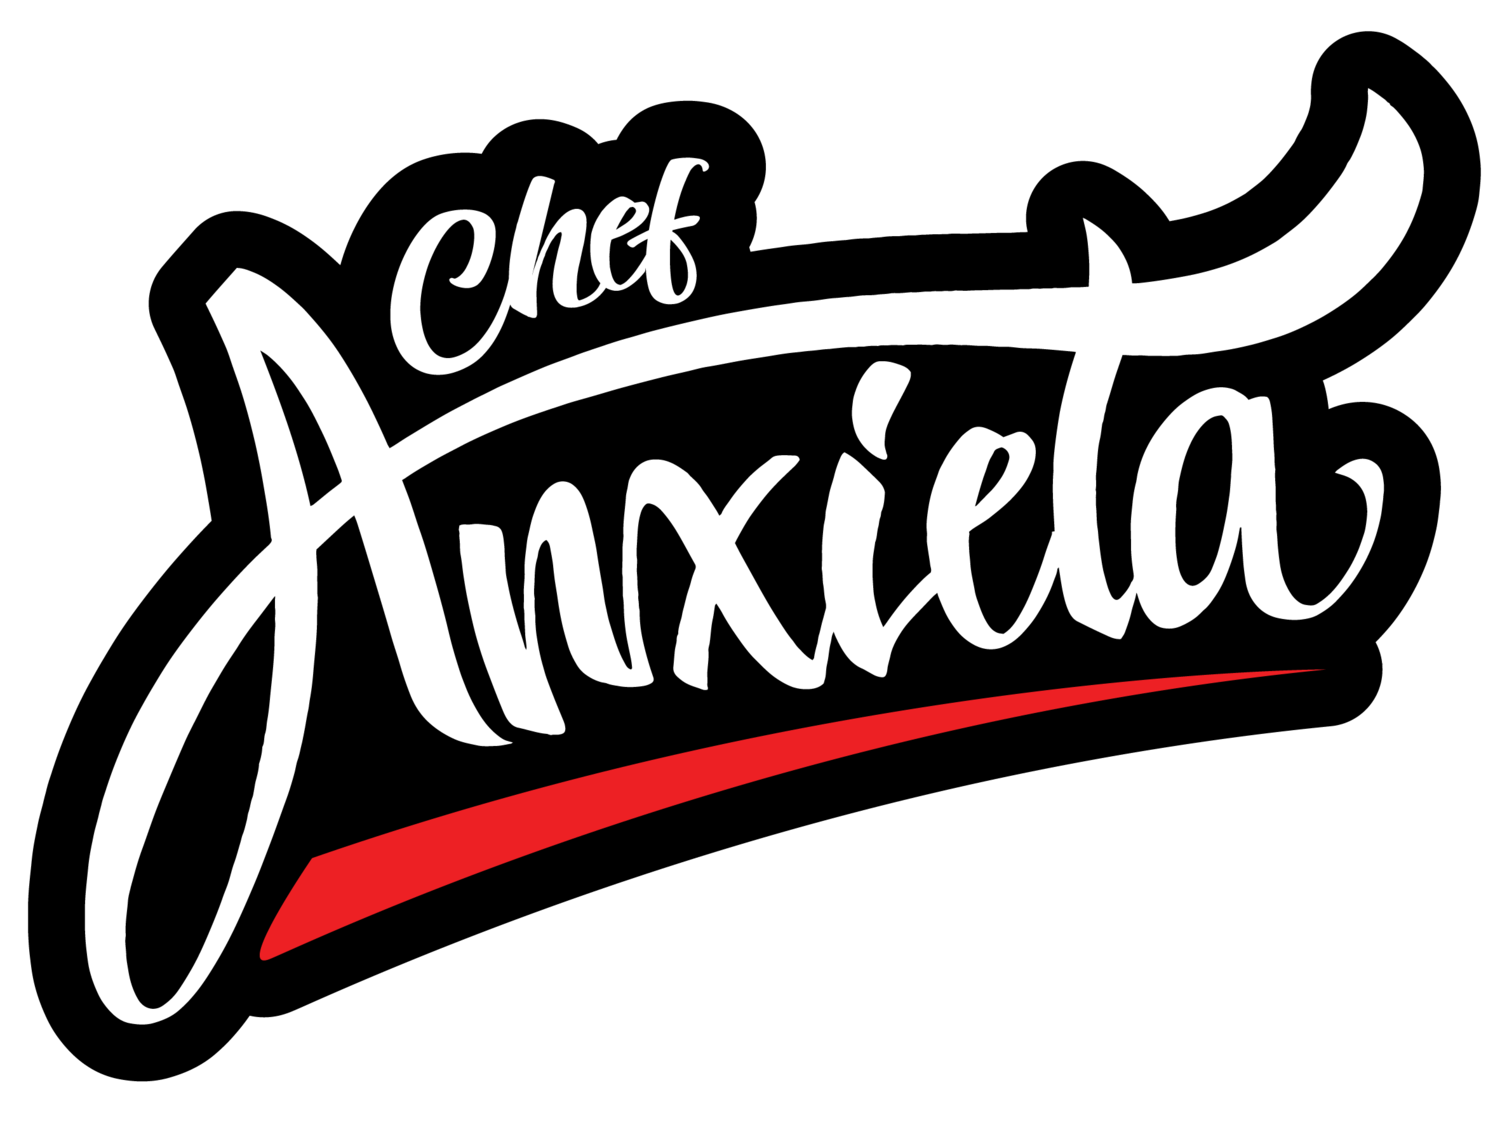 Chef Anxieta